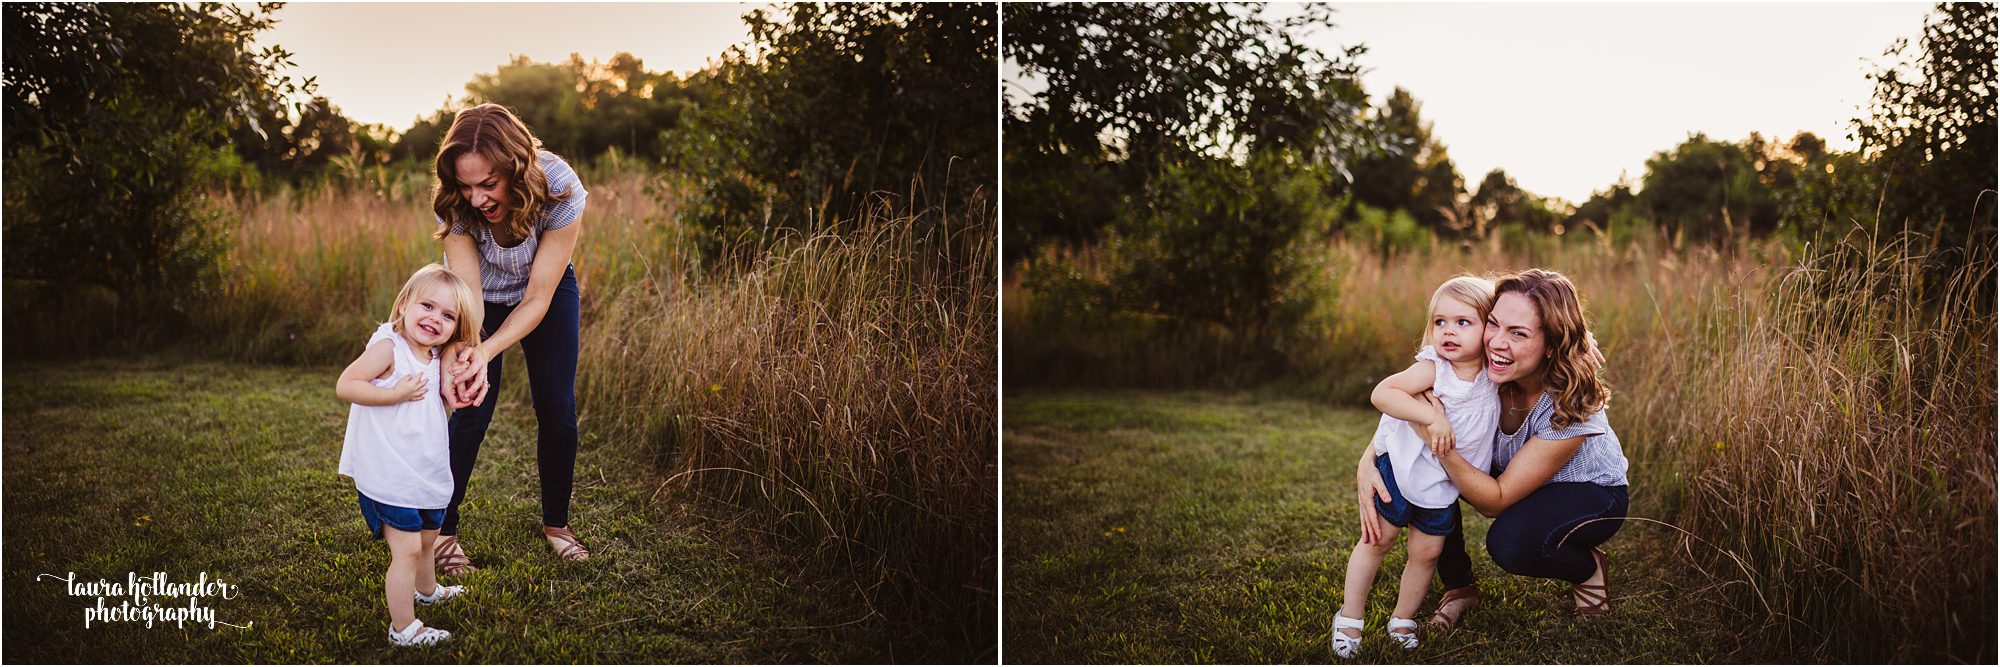 riverside park, battle creek MI, family portrait session at golden hour, Laura Hollander Photography